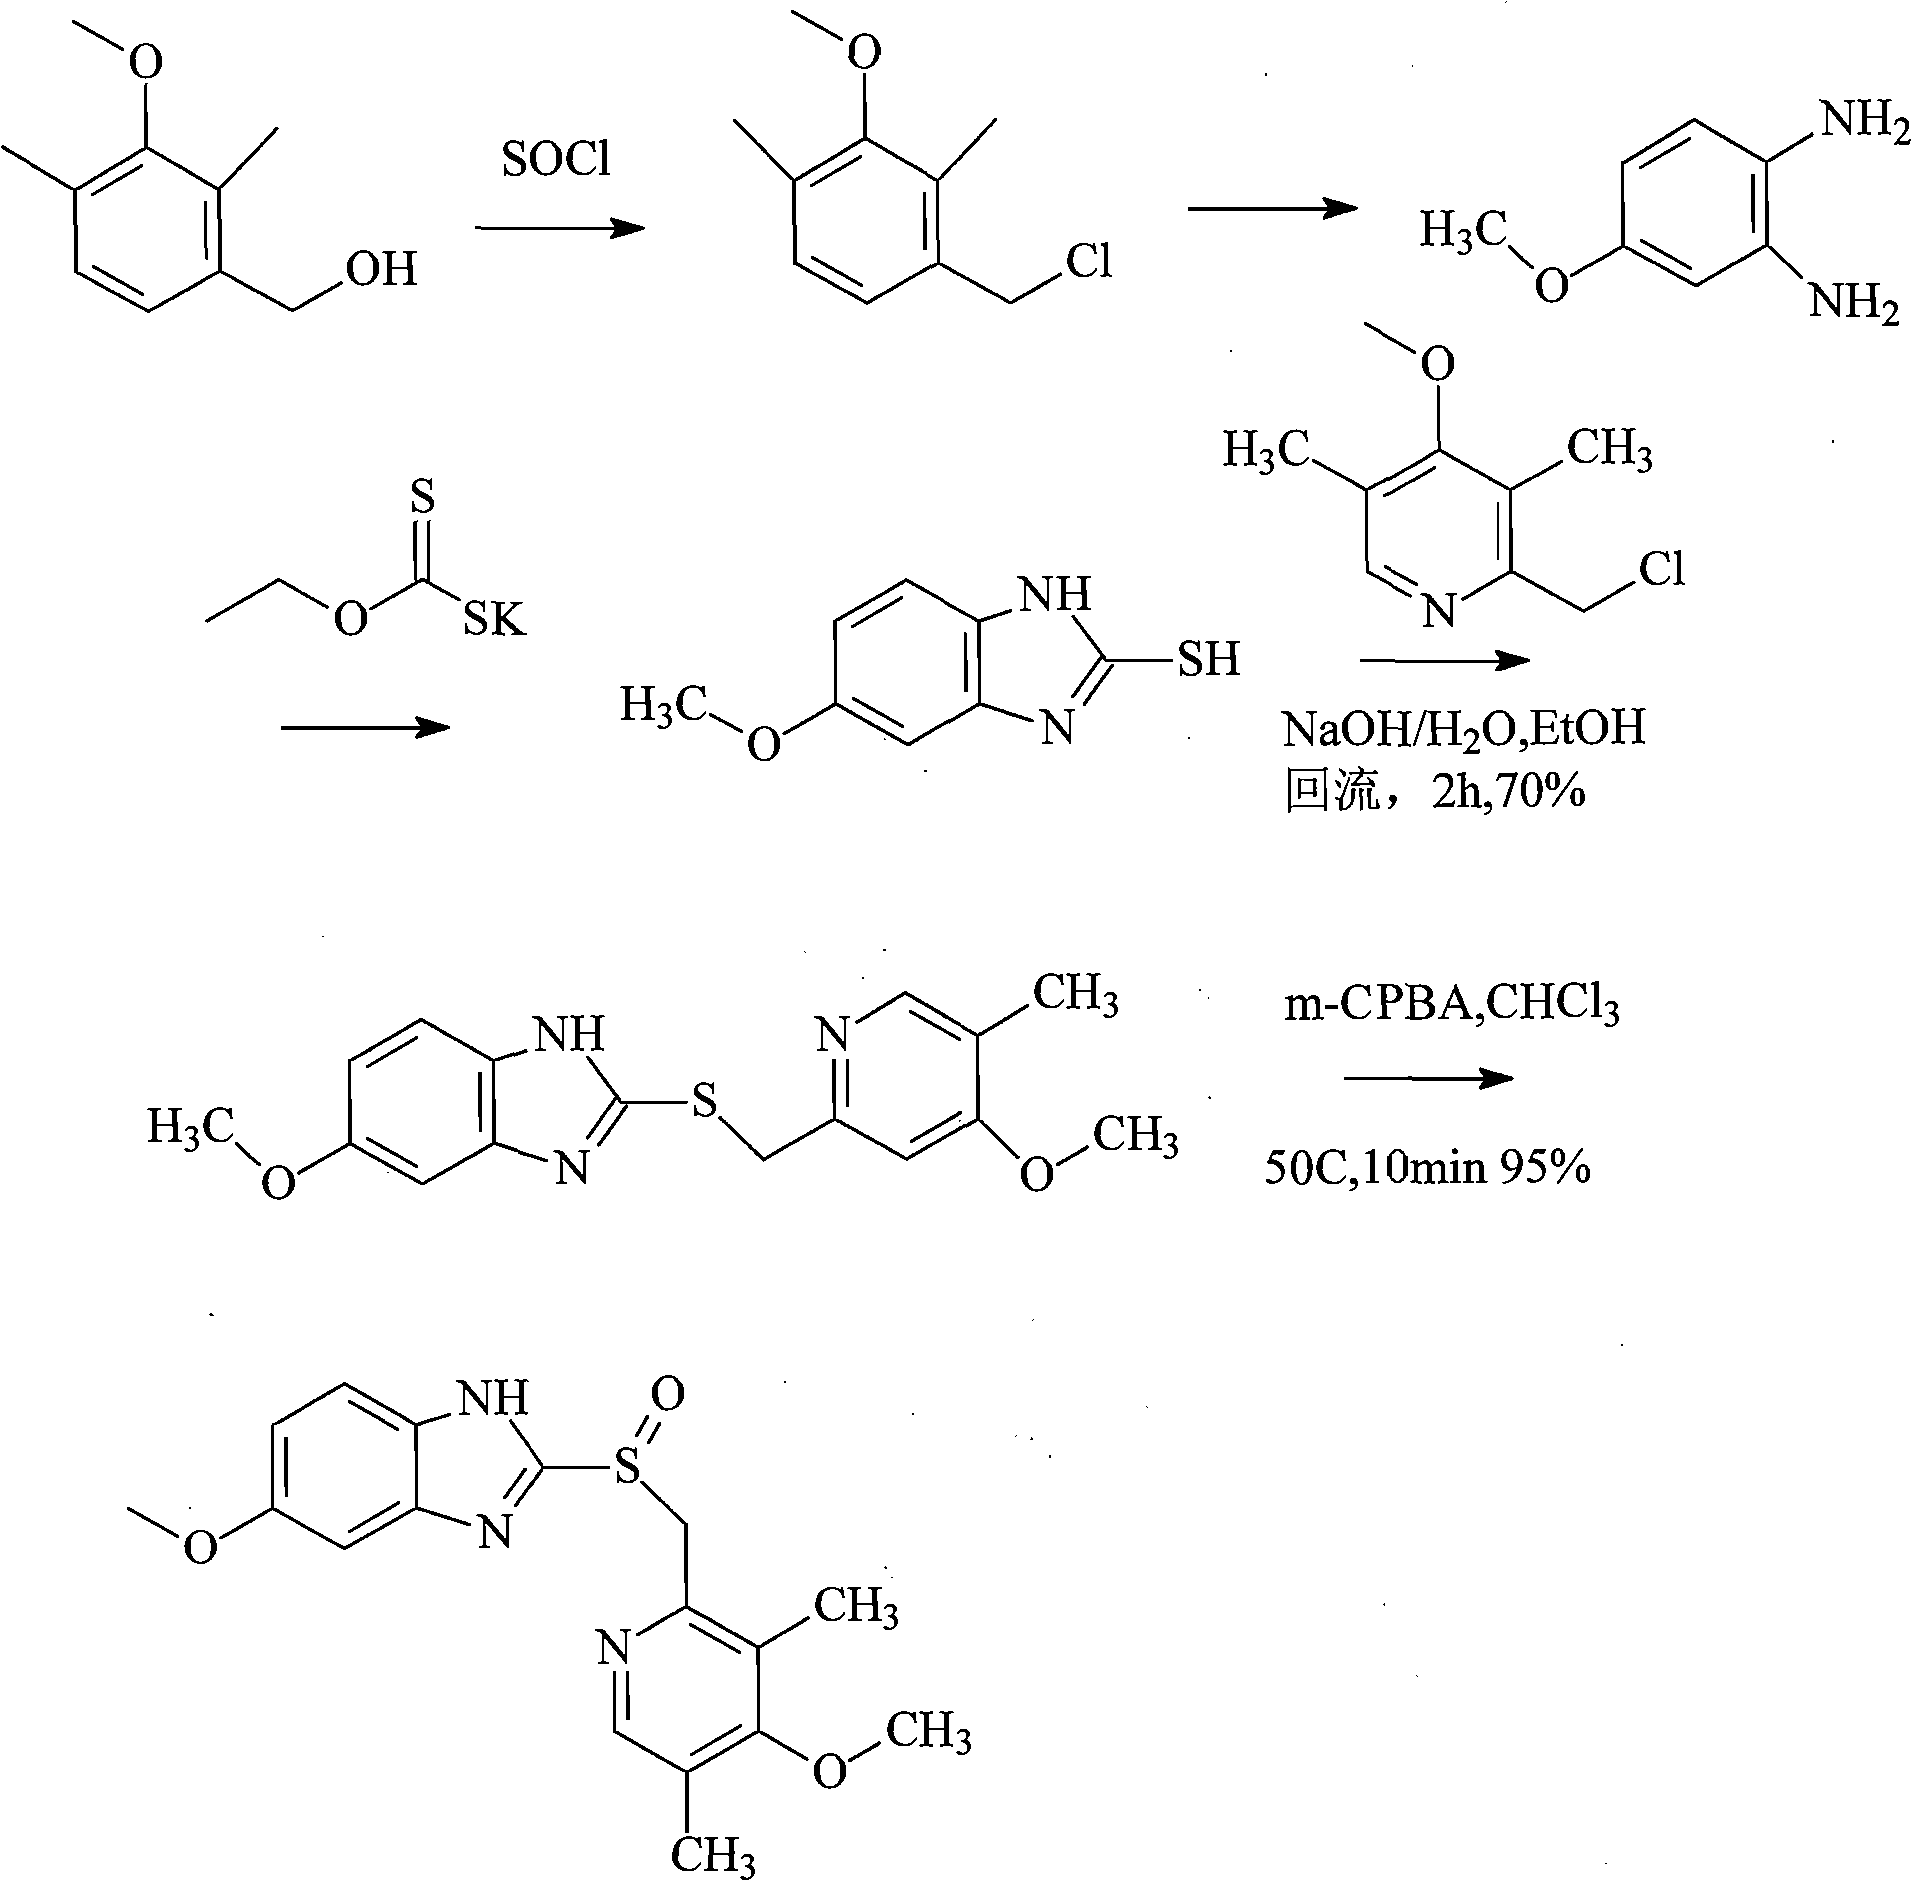 Esomeprazole sodium compound and preparation method thereof